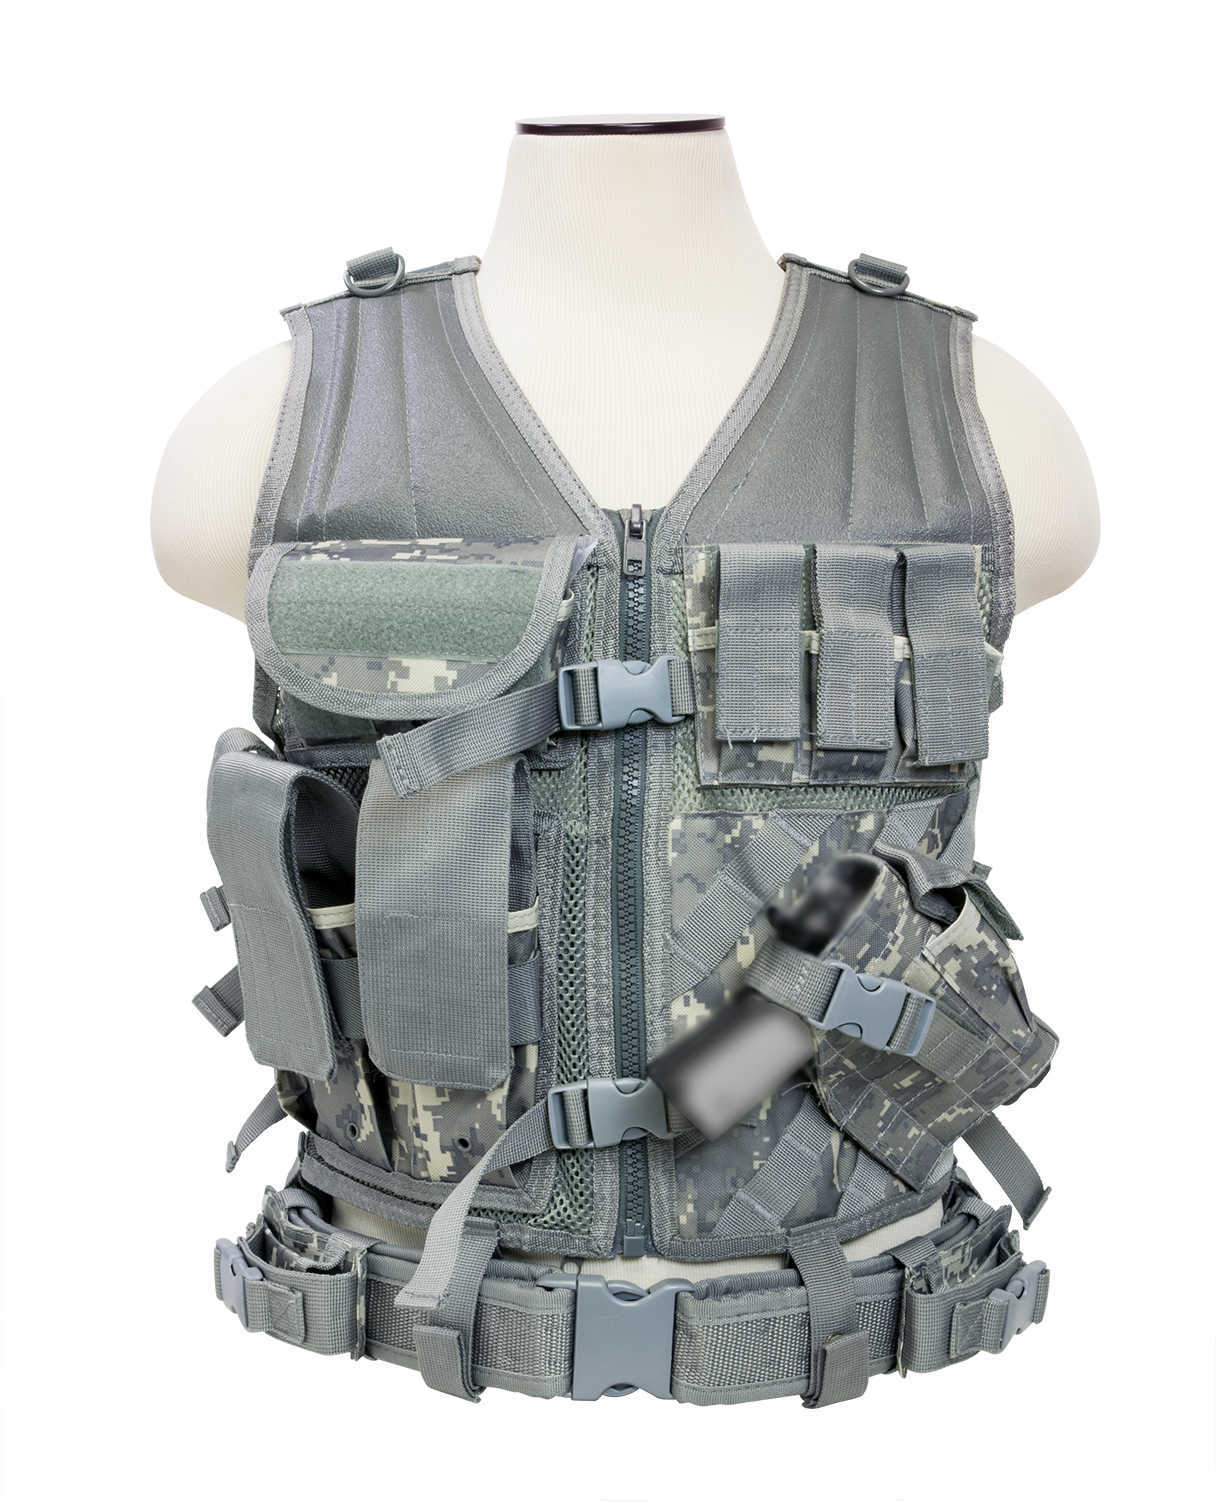 NCSTAR Tactical Vest Nylon Digital Camo Size Medium- 2XL Fully Adjustable PALS Webbing Pistol Mag Pouches Rifle